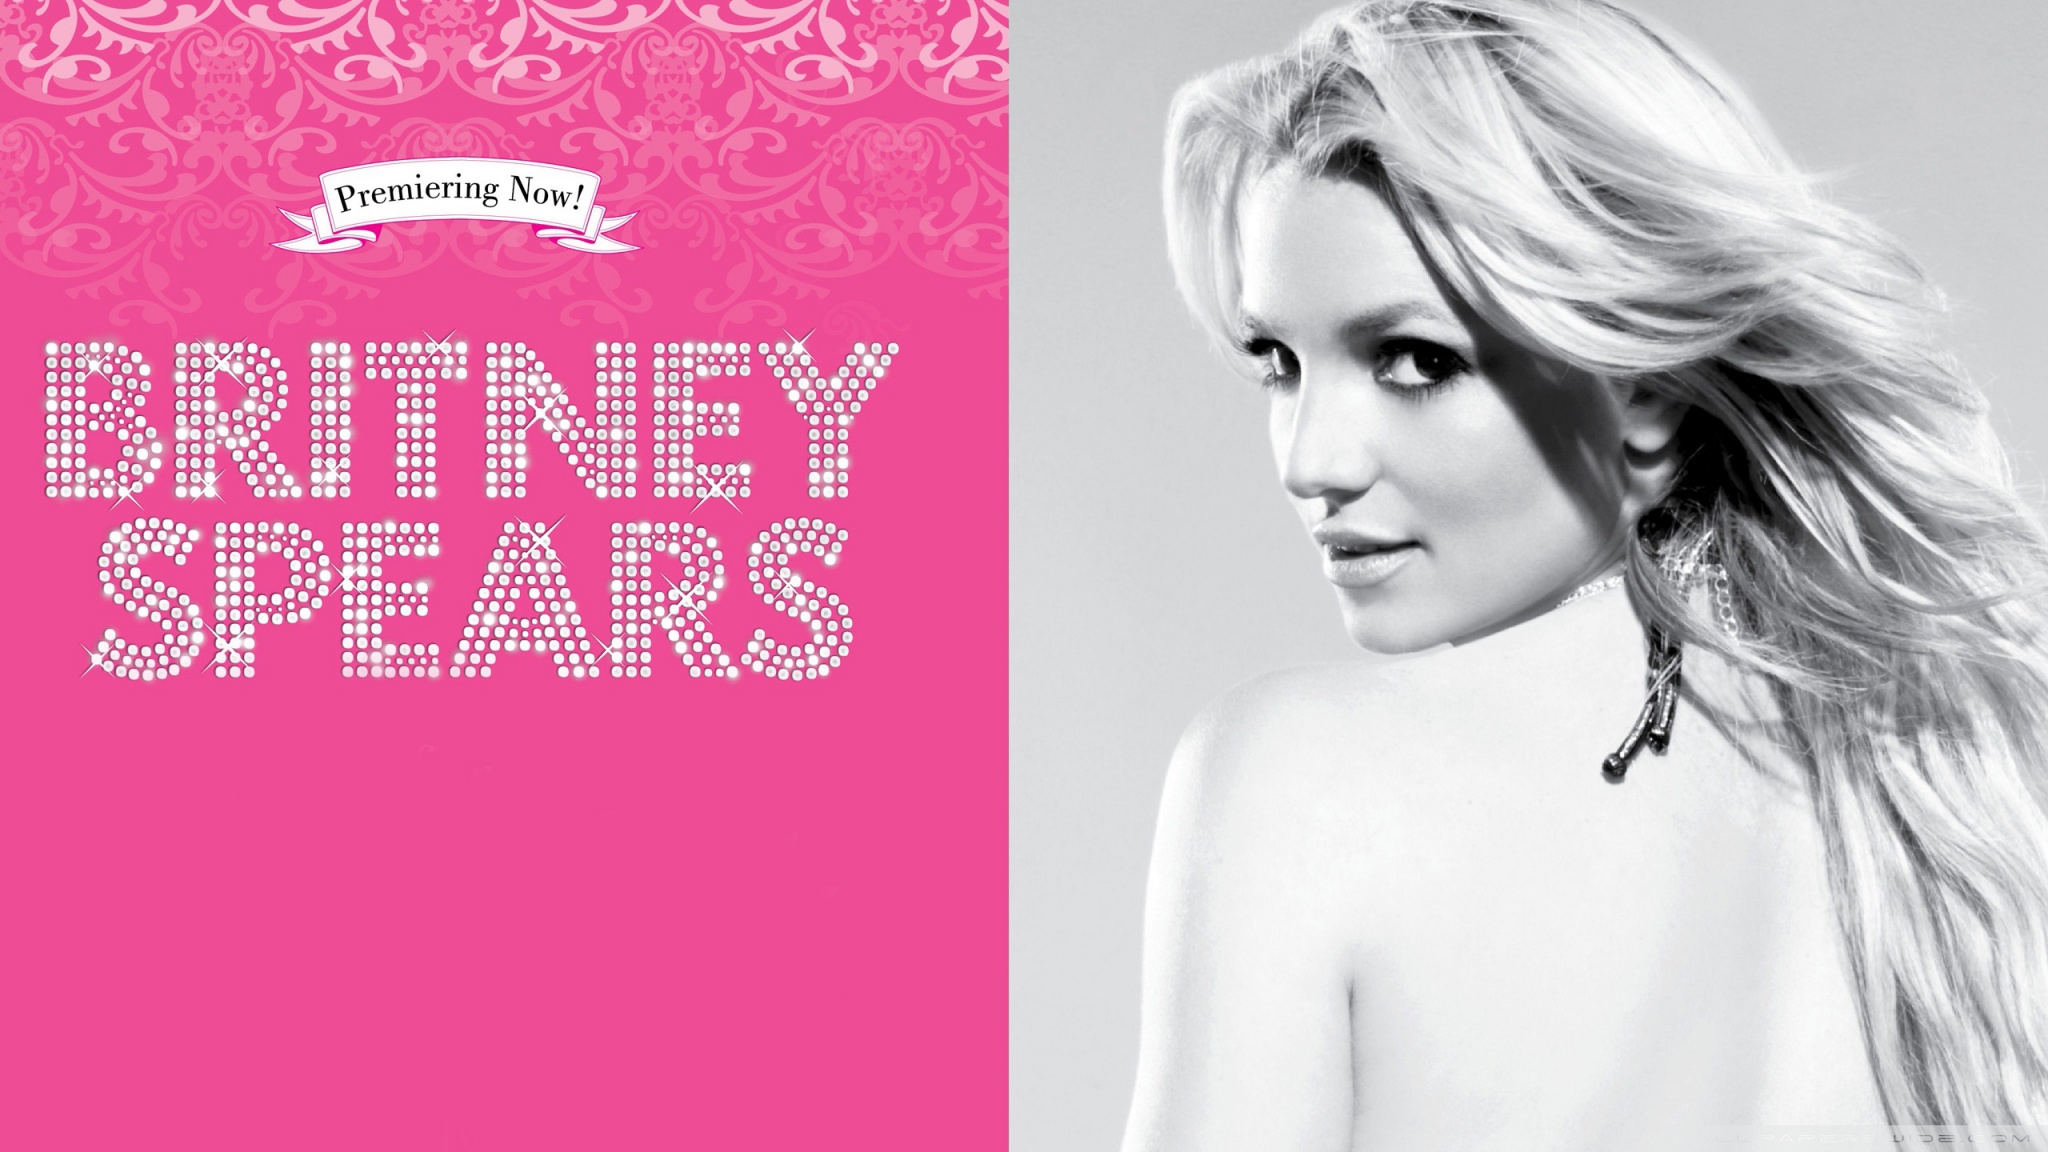 Britney Spears Candie's Ultra HD Desktop Background Wallpaper for 4K UHD TV, Tablet